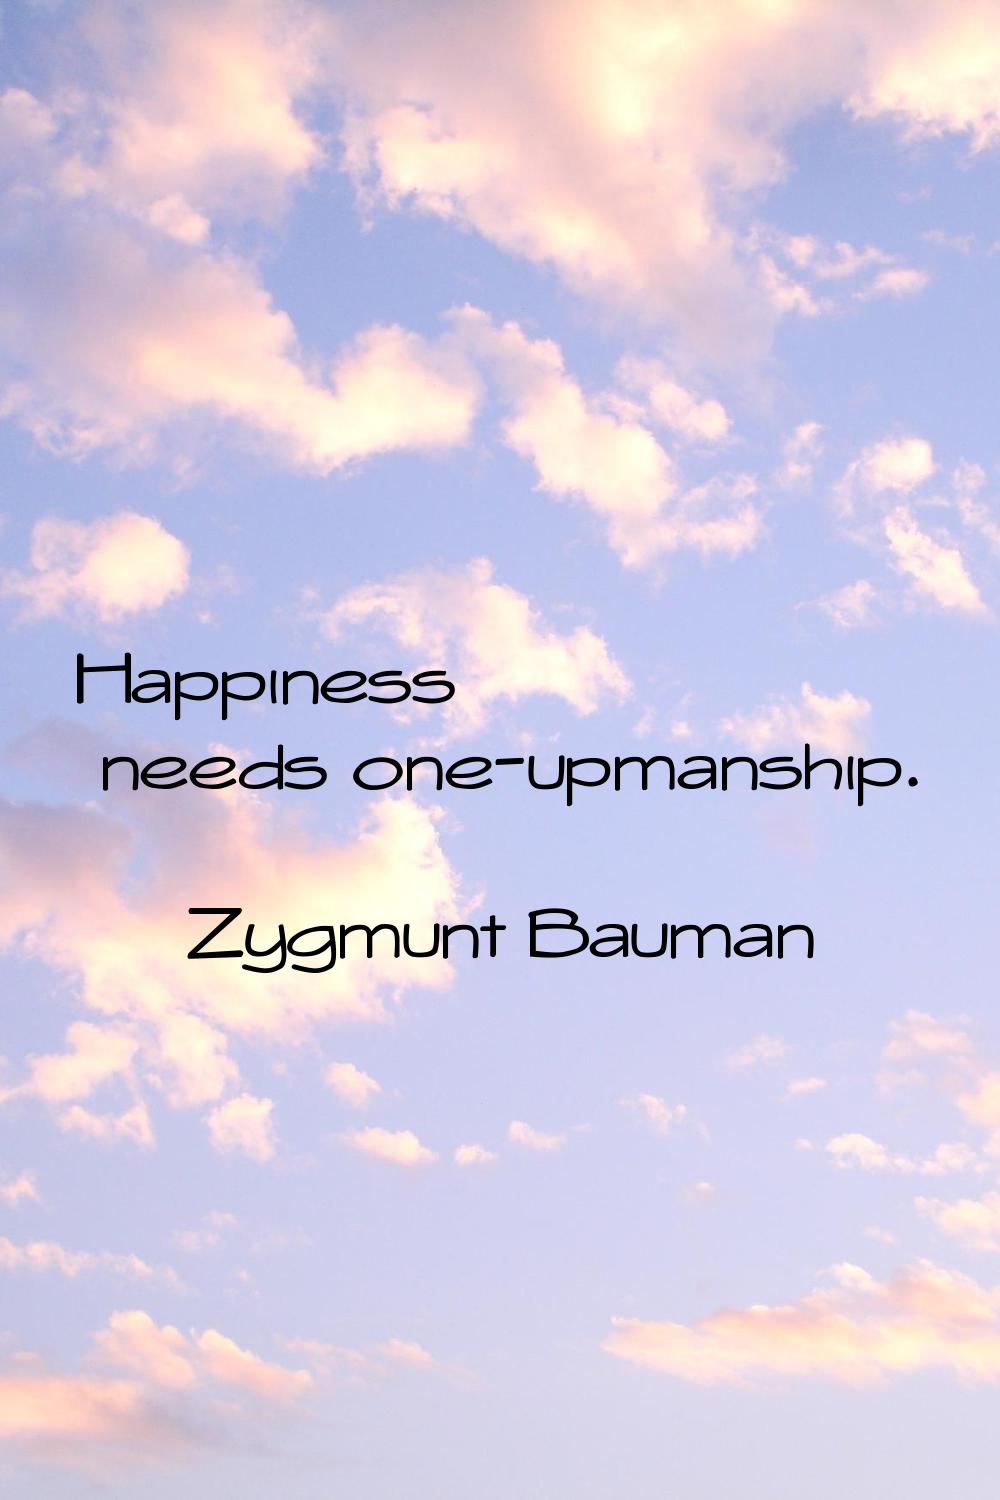 Happiness needs one-upmanship.